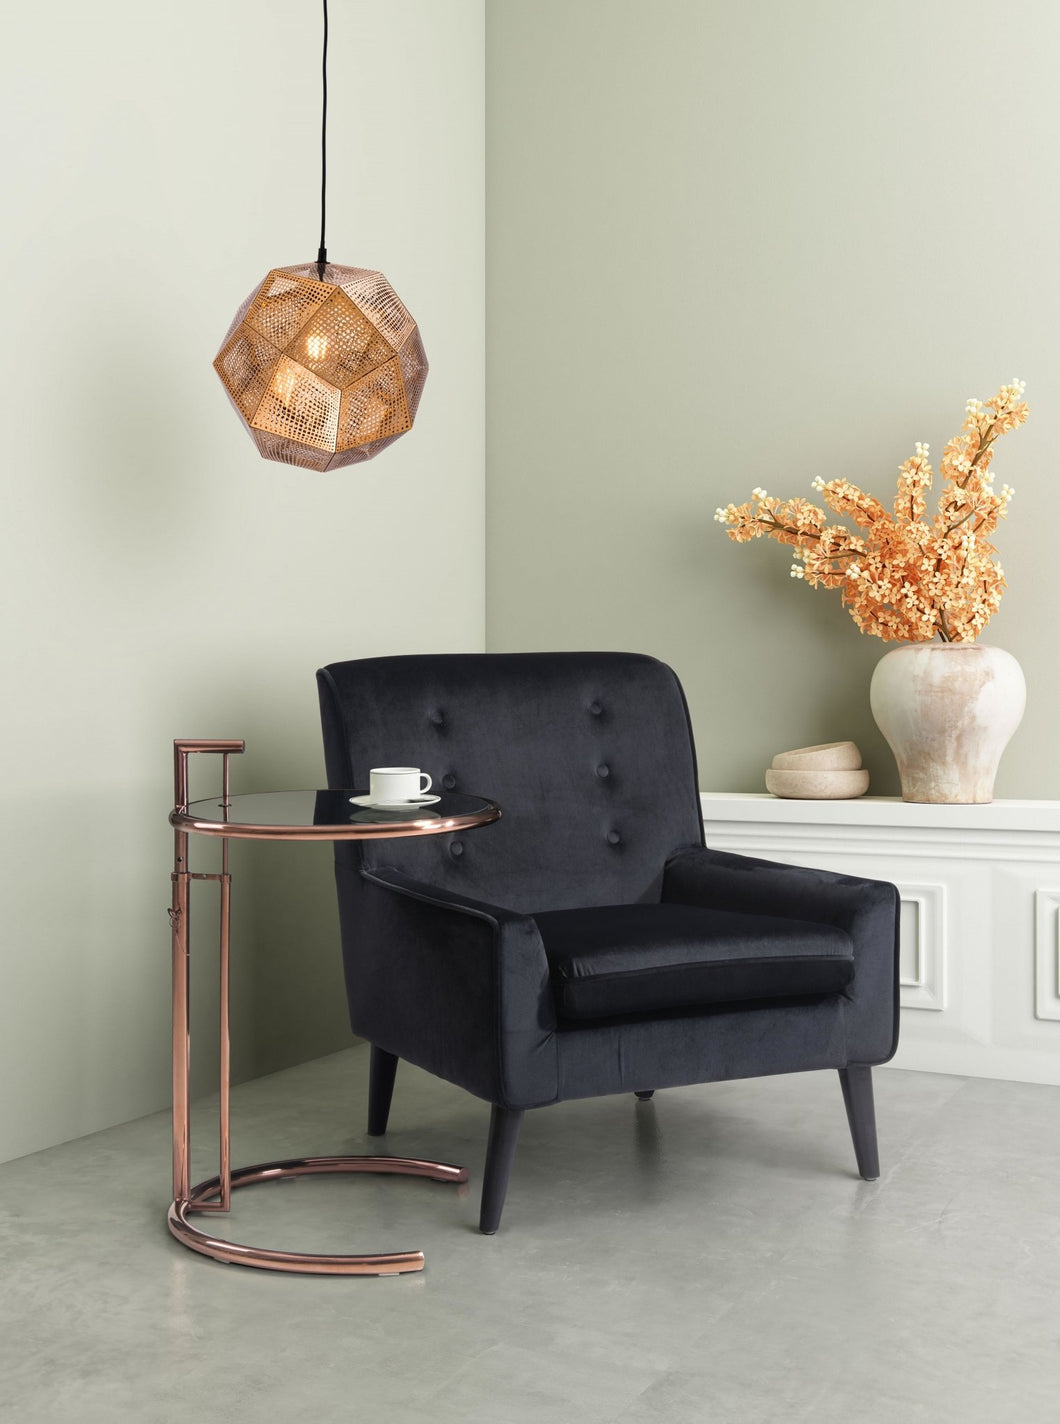 Bald Ceiling Lamp Gold - Versatile Home